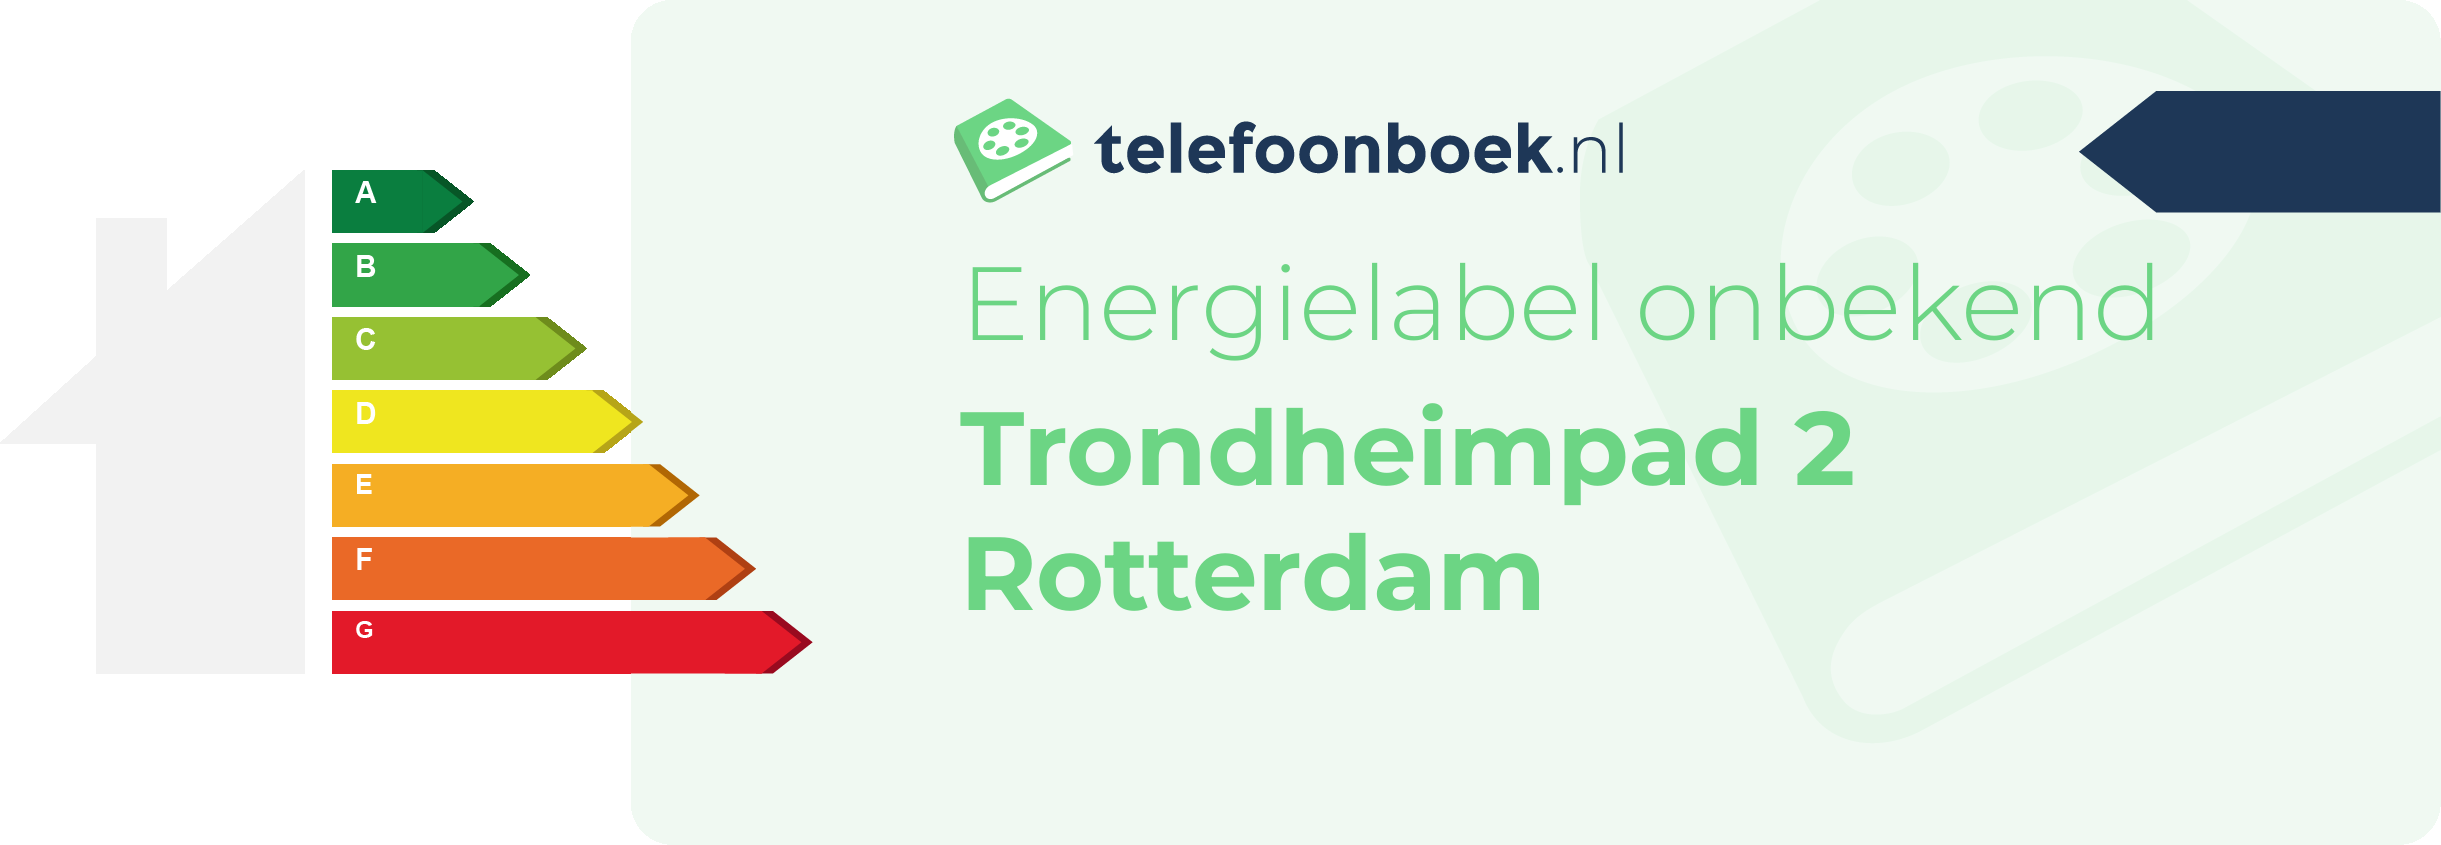 Energielabel Trondheimpad 2 Rotterdam